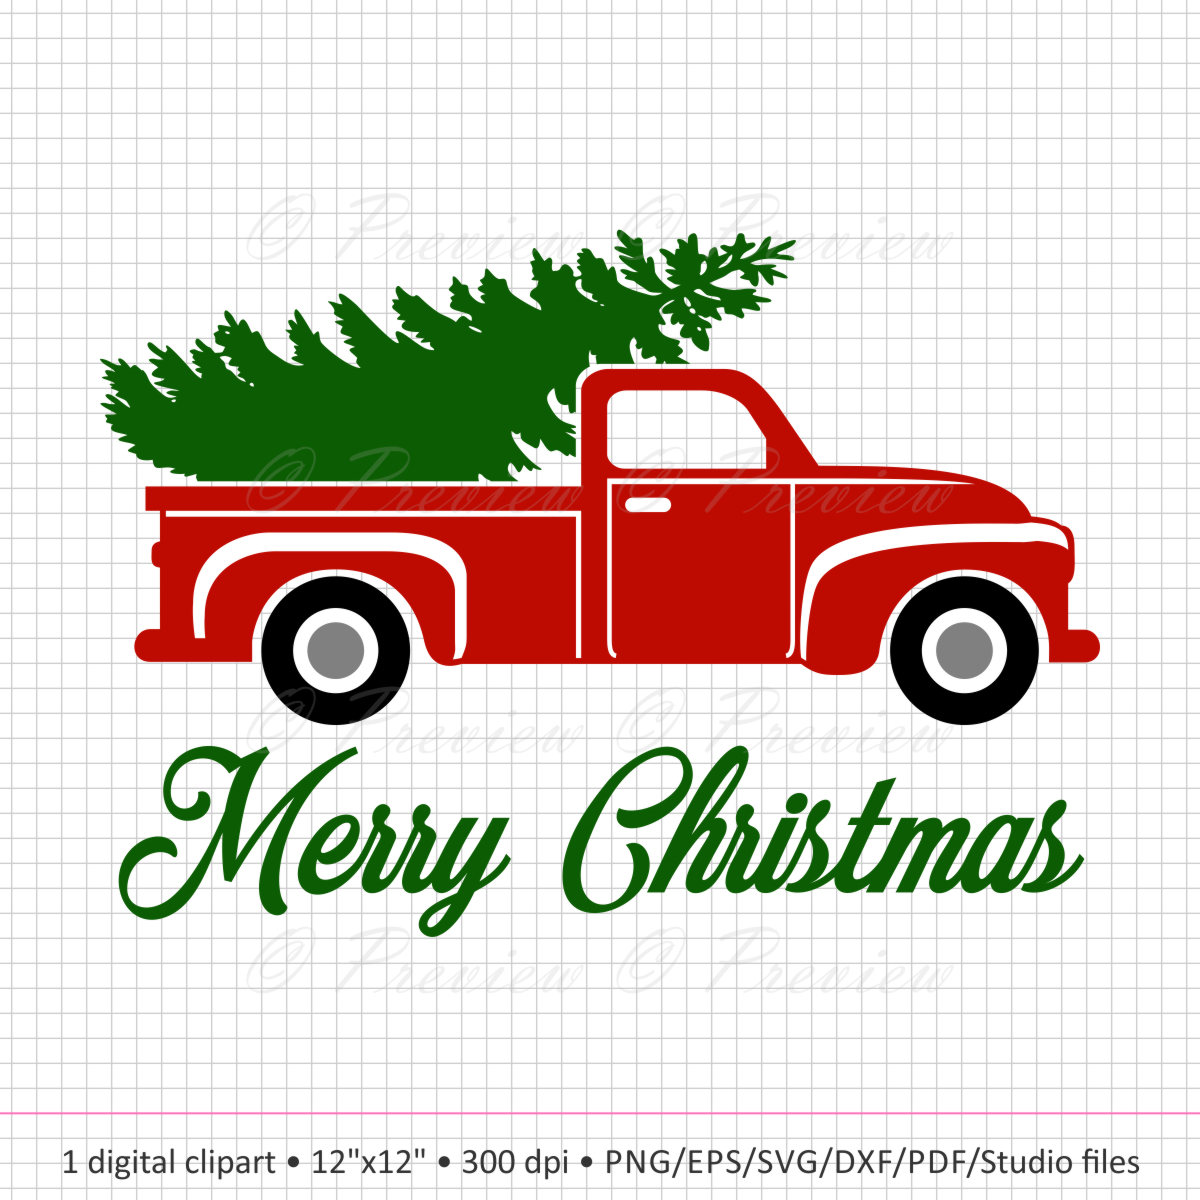 Download Buy 2 Get 1 Free Digital Clipart Christmas Tree Truck